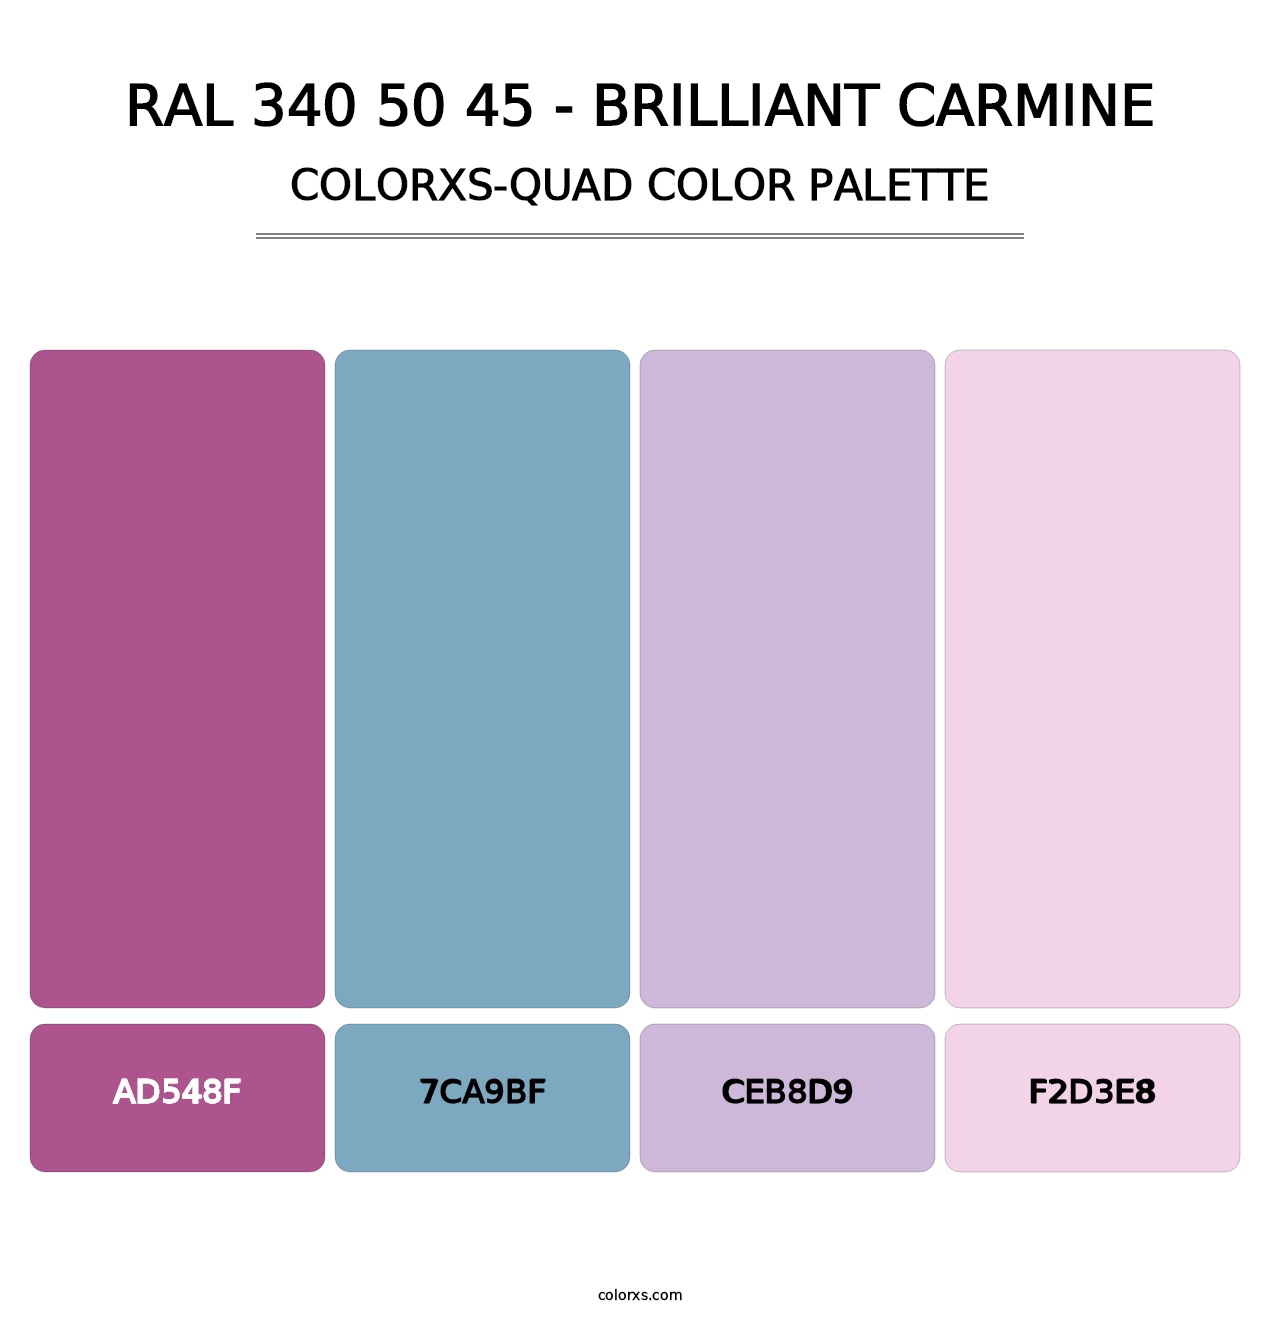 RAL 340 50 45 - Brilliant Carmine - Colorxs Quad Palette